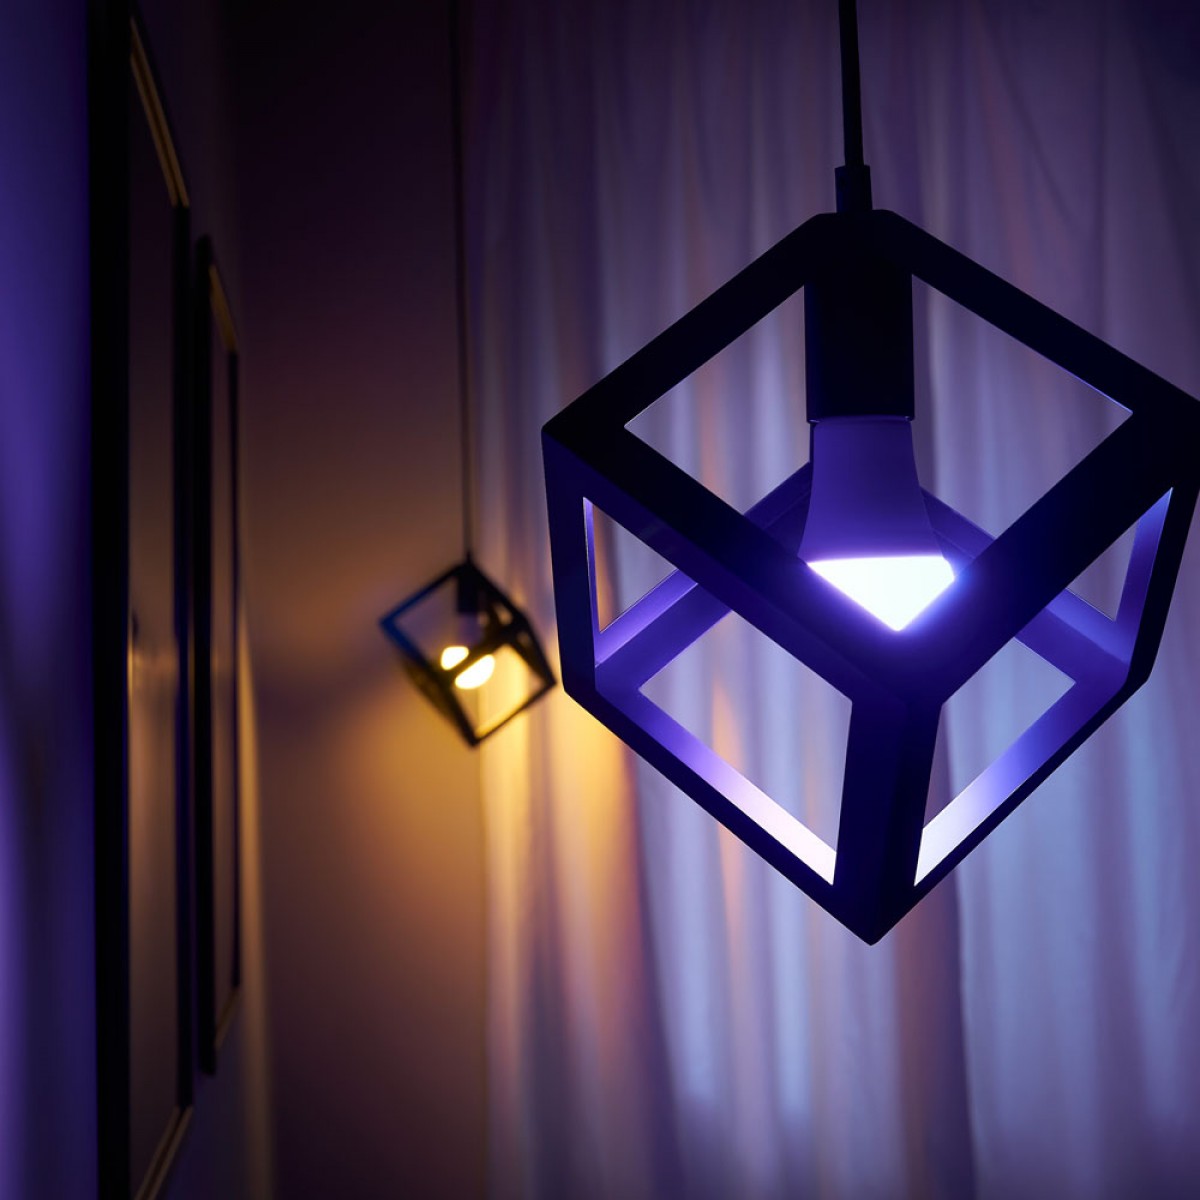 Shelly Duo WLAN LED Lampe, RGBW, dimmbar, E 27 Sockel, 9 Watt, RGB + weiß 4.000 K